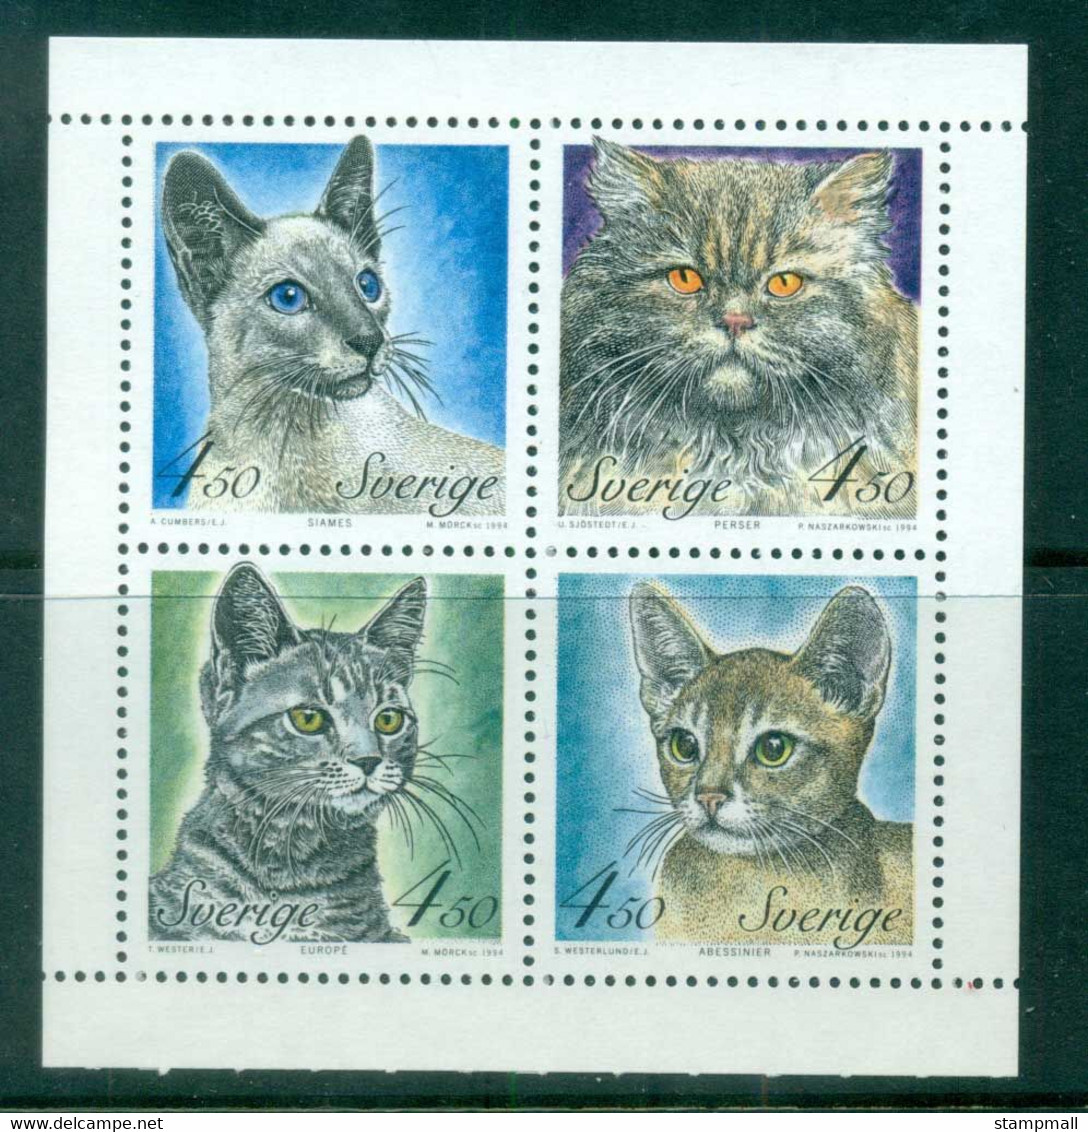 Sweden 1994 Cats Booklet Pane MUH Lot84186 - Nuovi